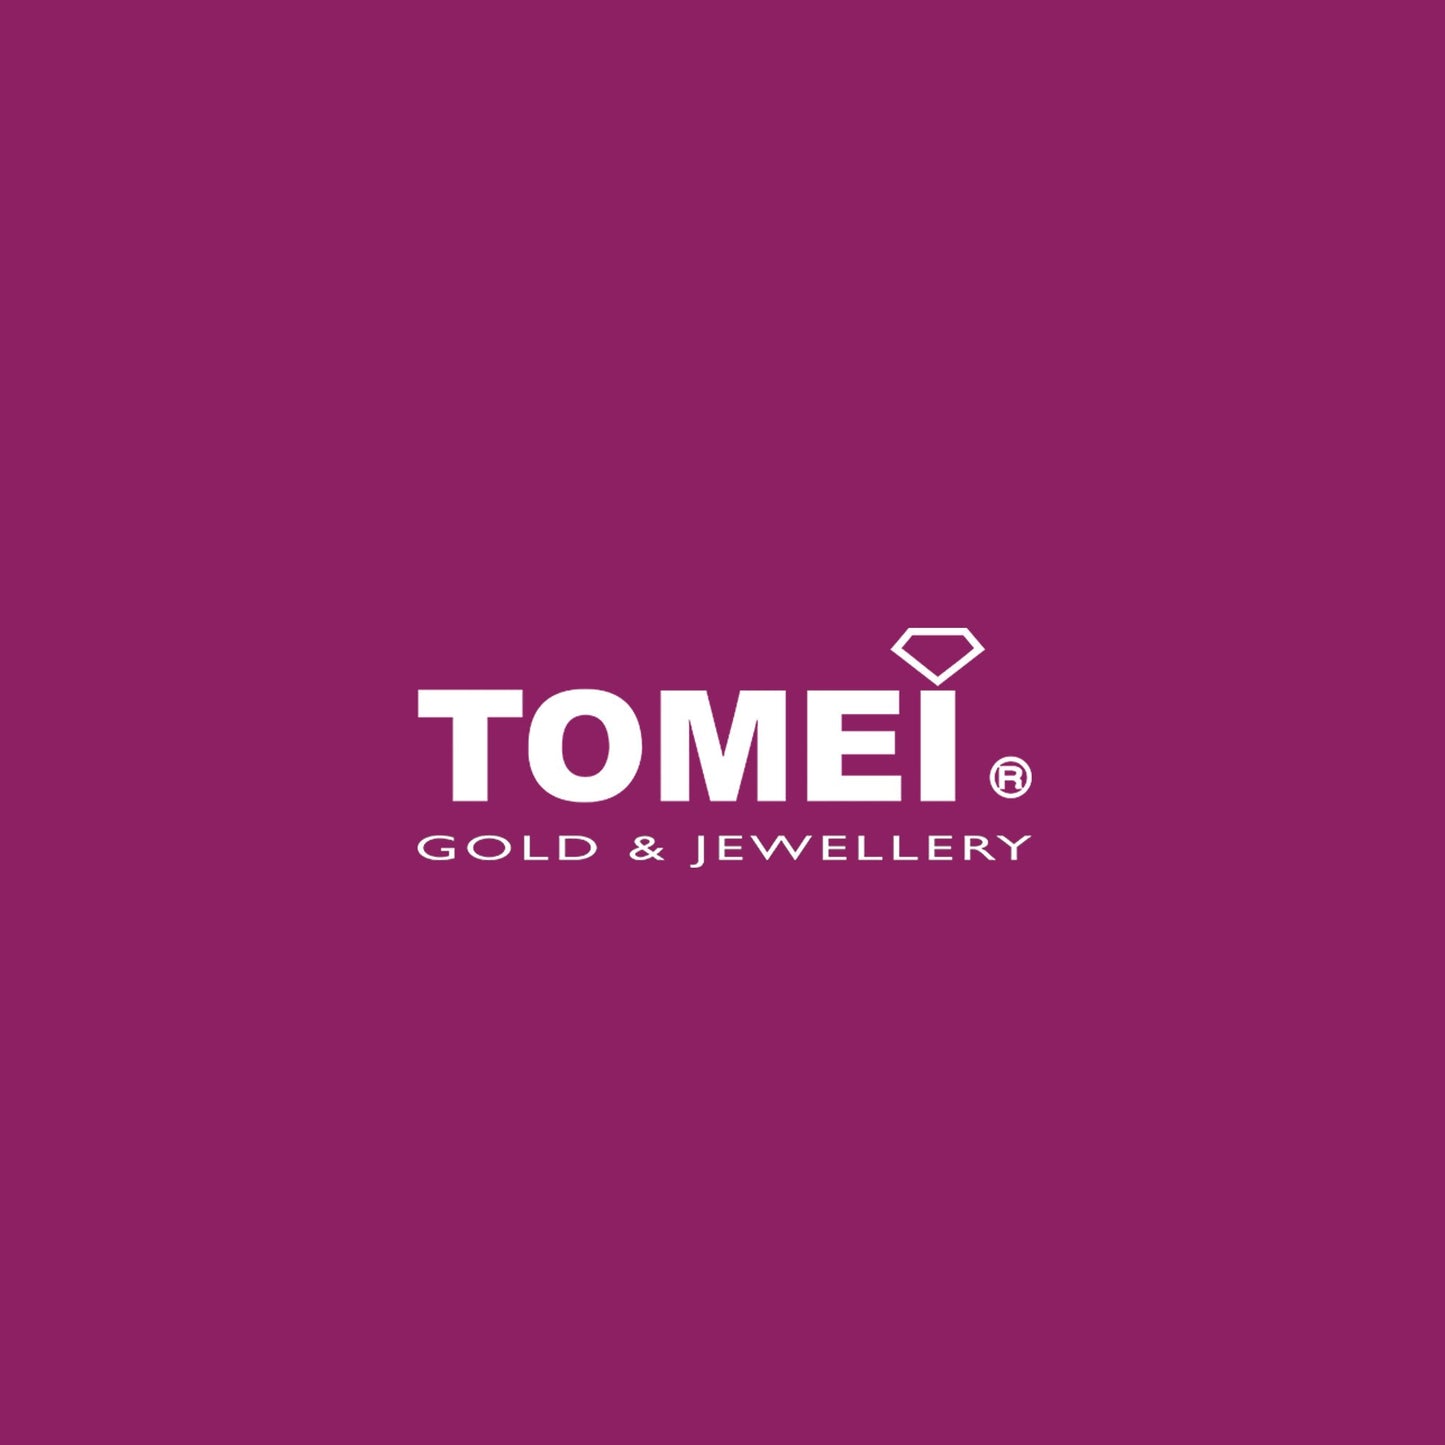 TOMEI Square Hoop Diamond Earrings White Gold 750